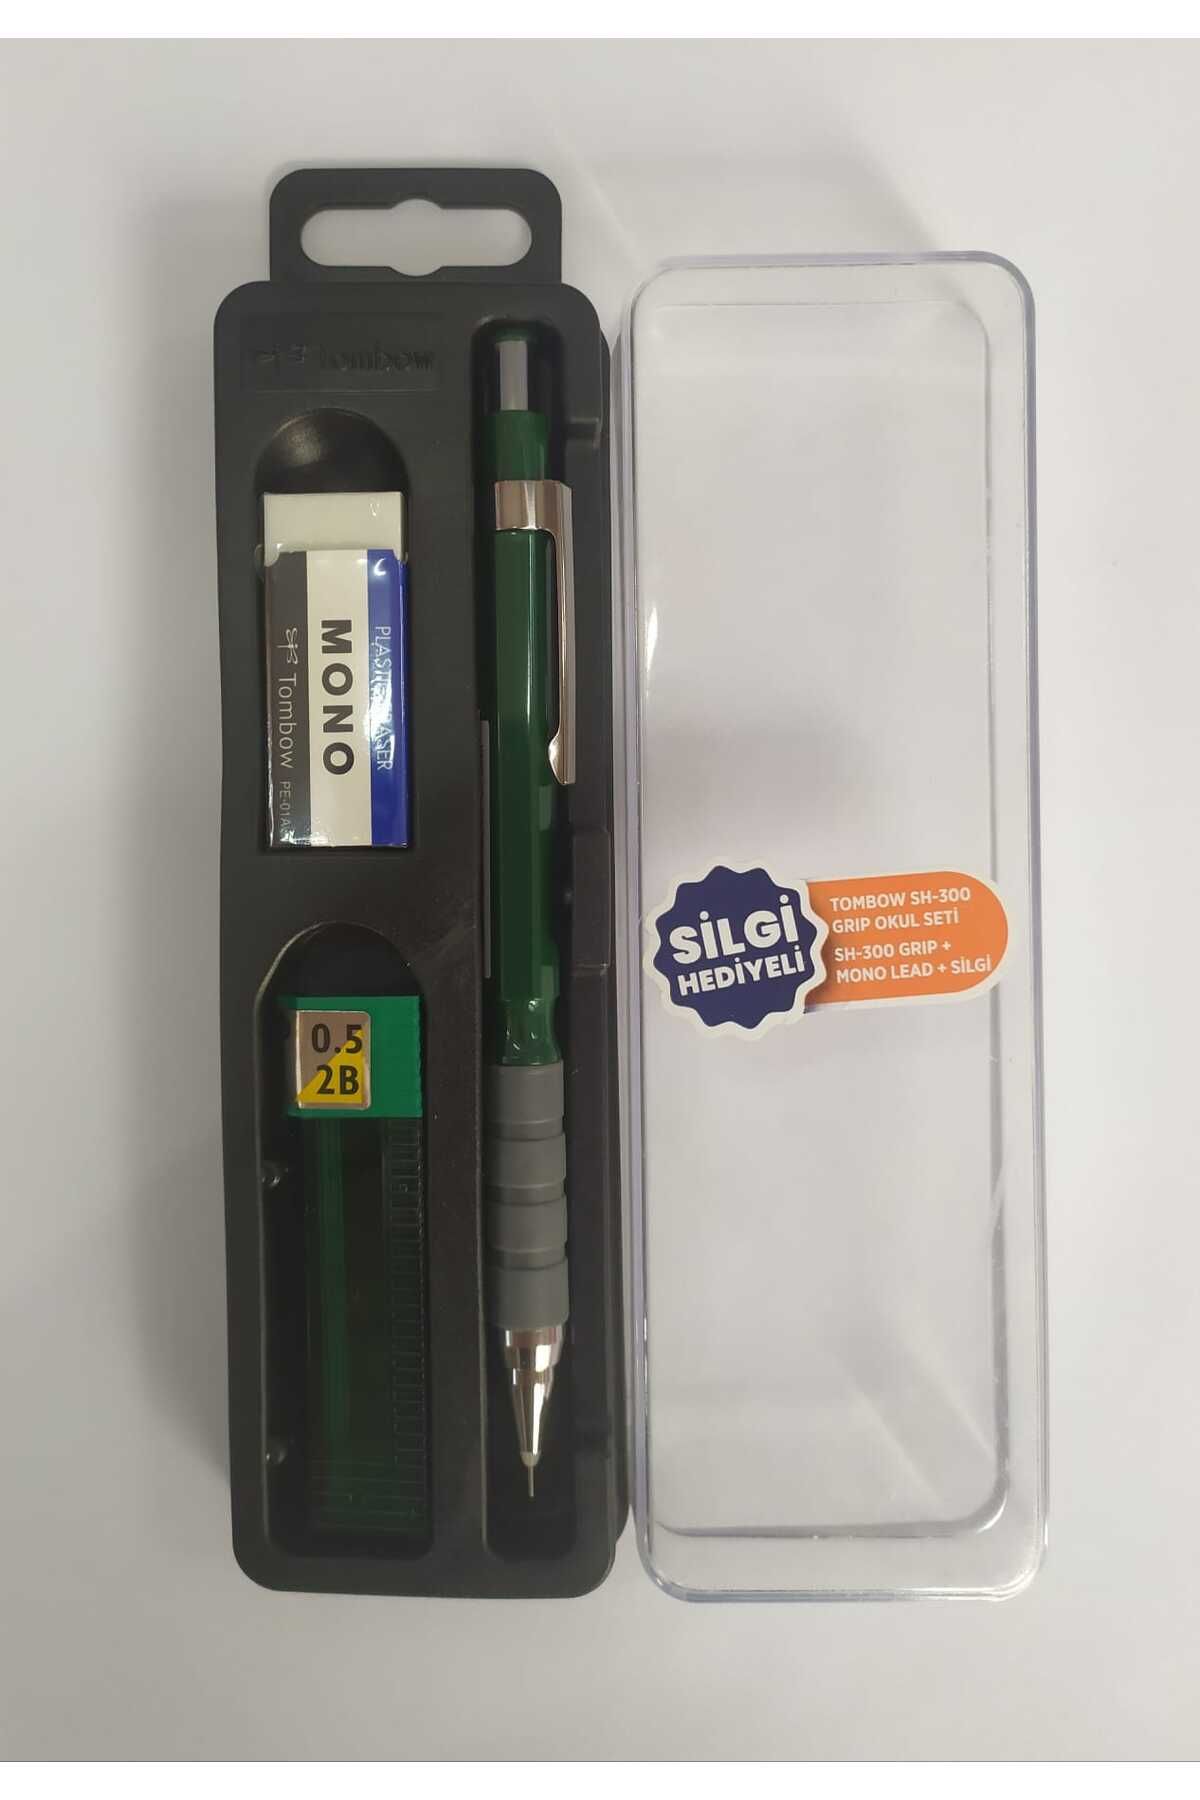 Tombow Sh-300 Grip 0,5mm Plastik Kutulu Set Neon Yeşil Renkli